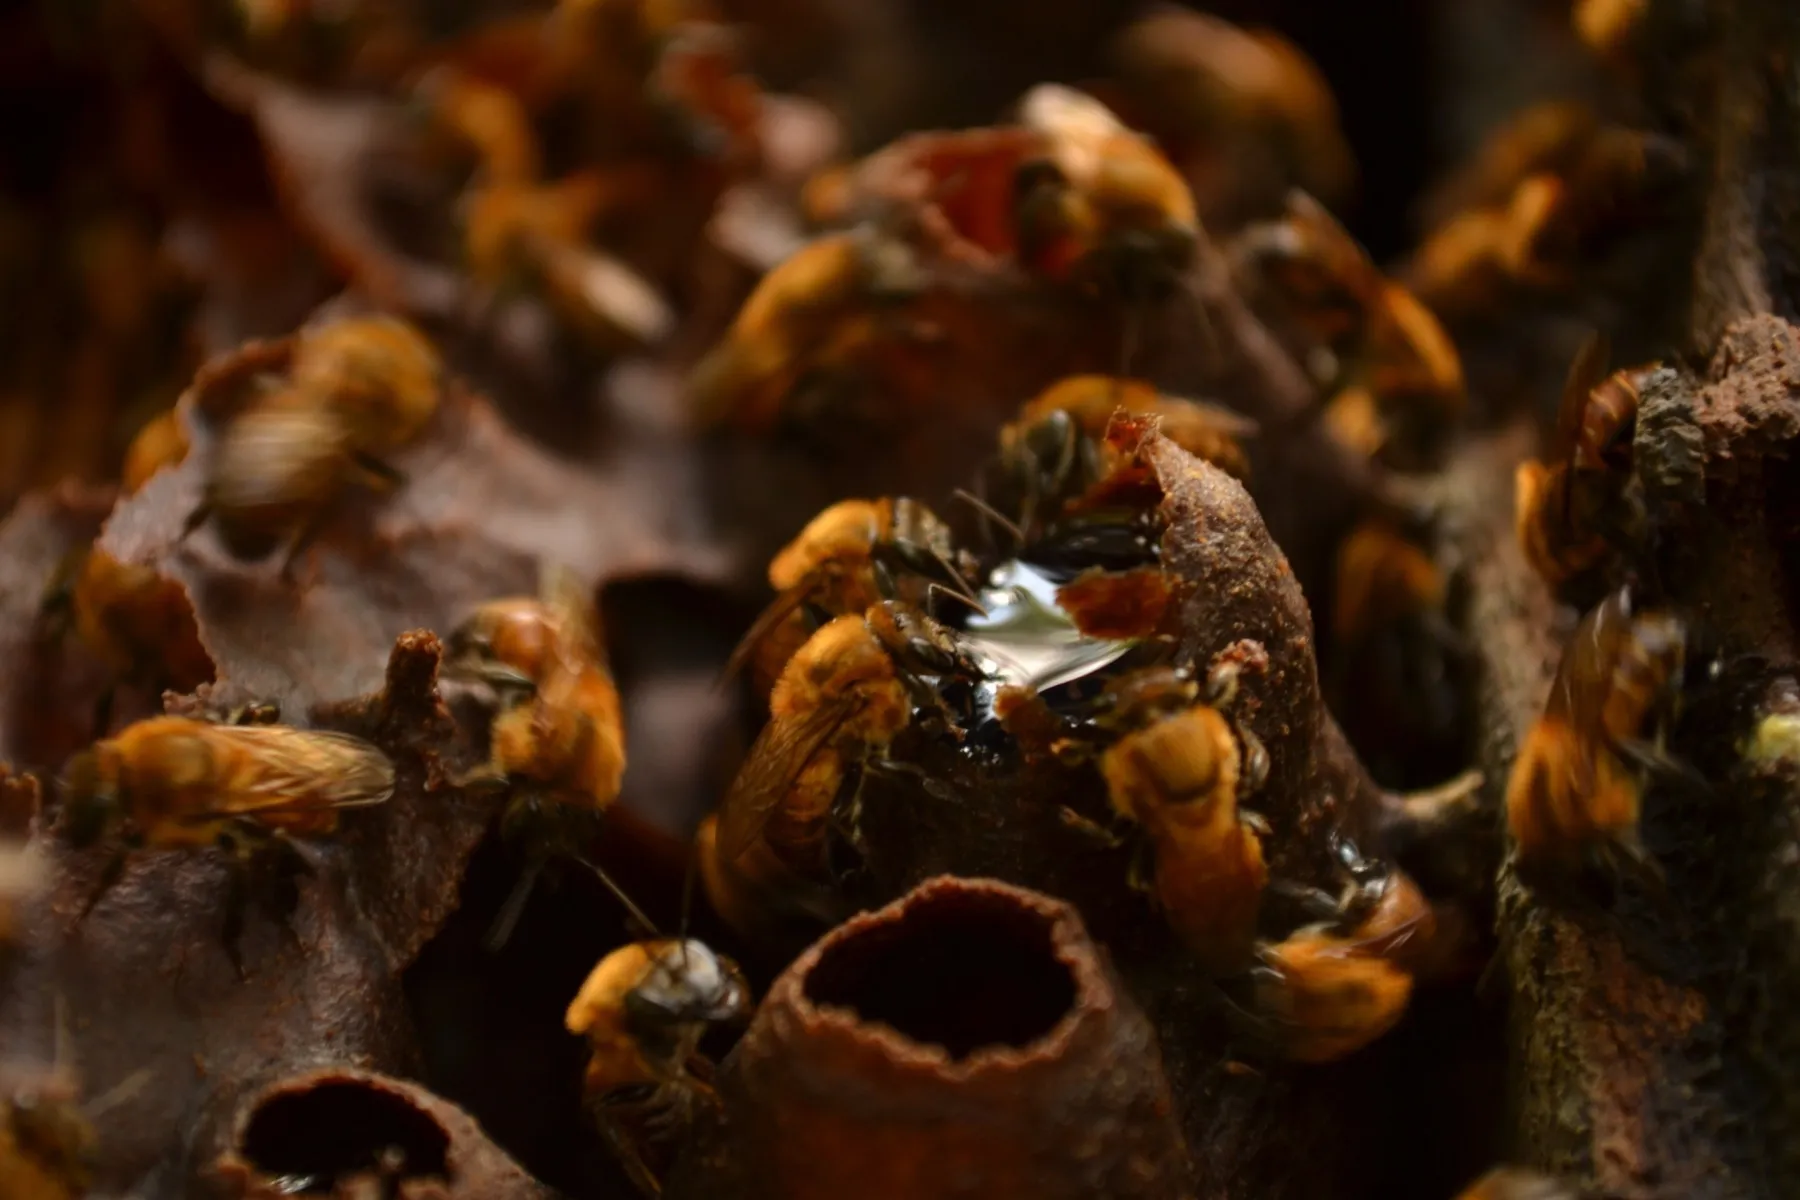 Miel de abeja boca de sapo (Melipona sp.) [Antioquía] (120 g)